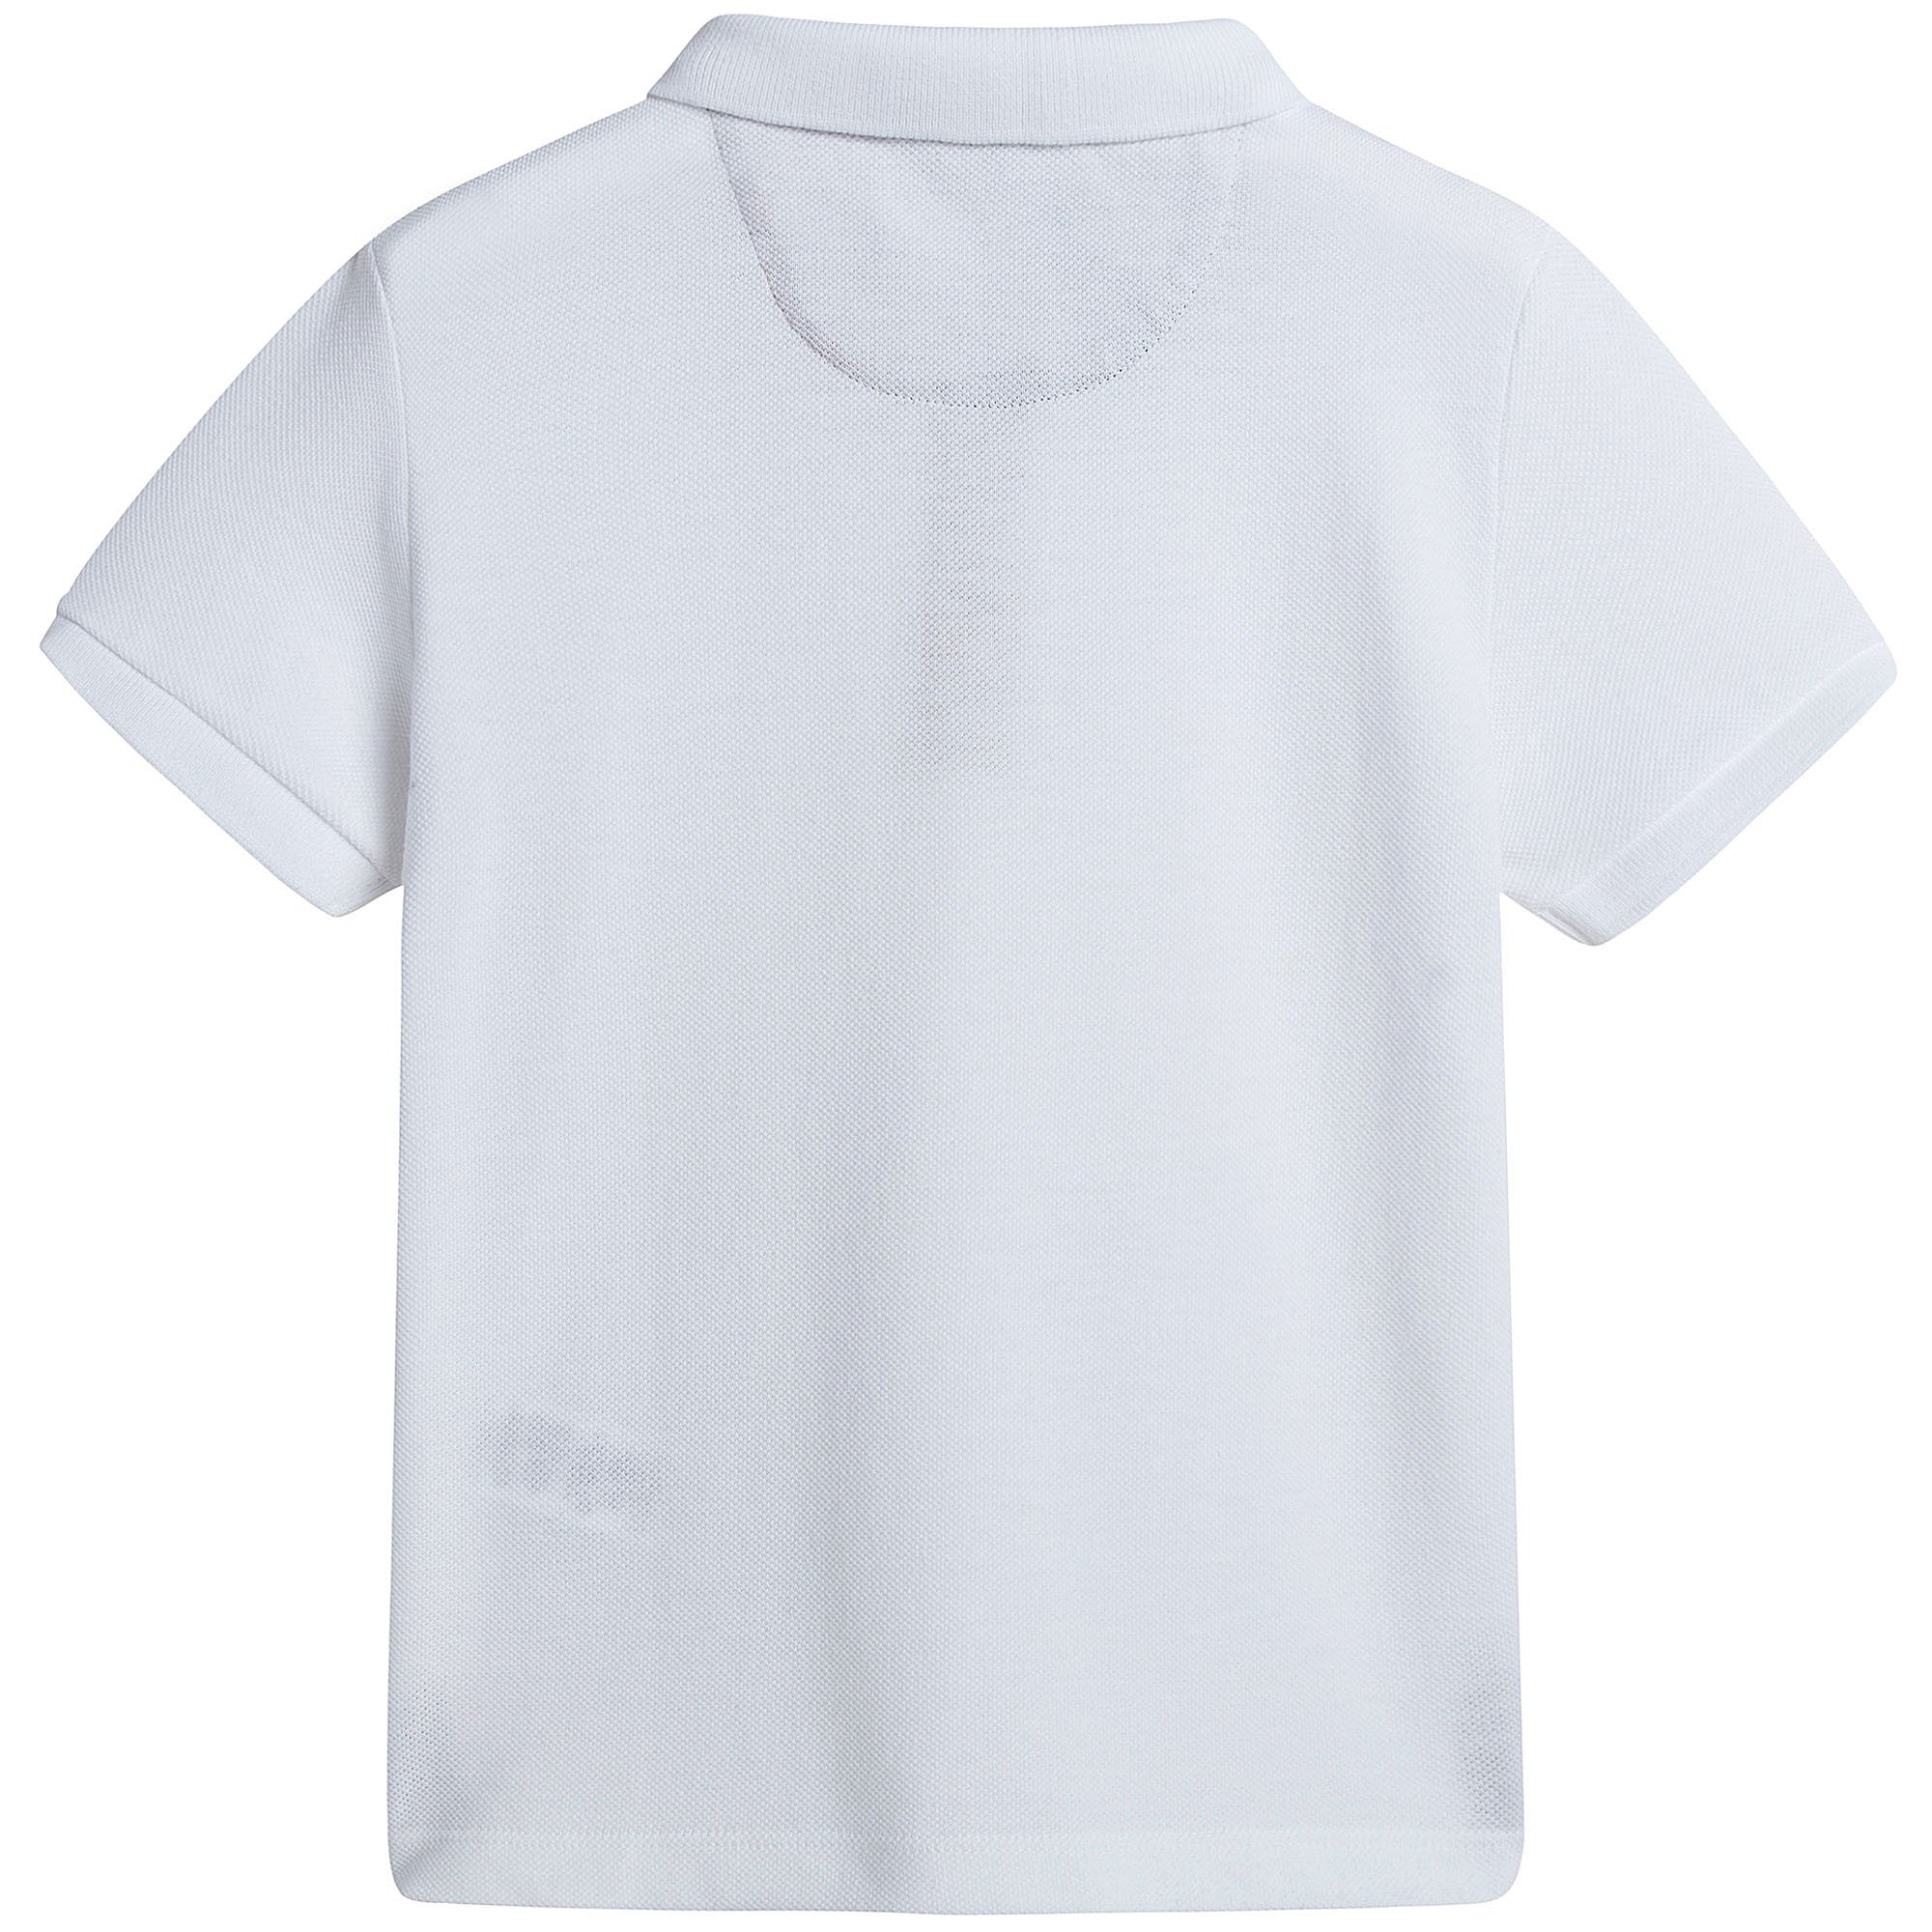 Boys White Cotton Polo Shirt - CÉMAROSE | Children's Fashion Store - 2